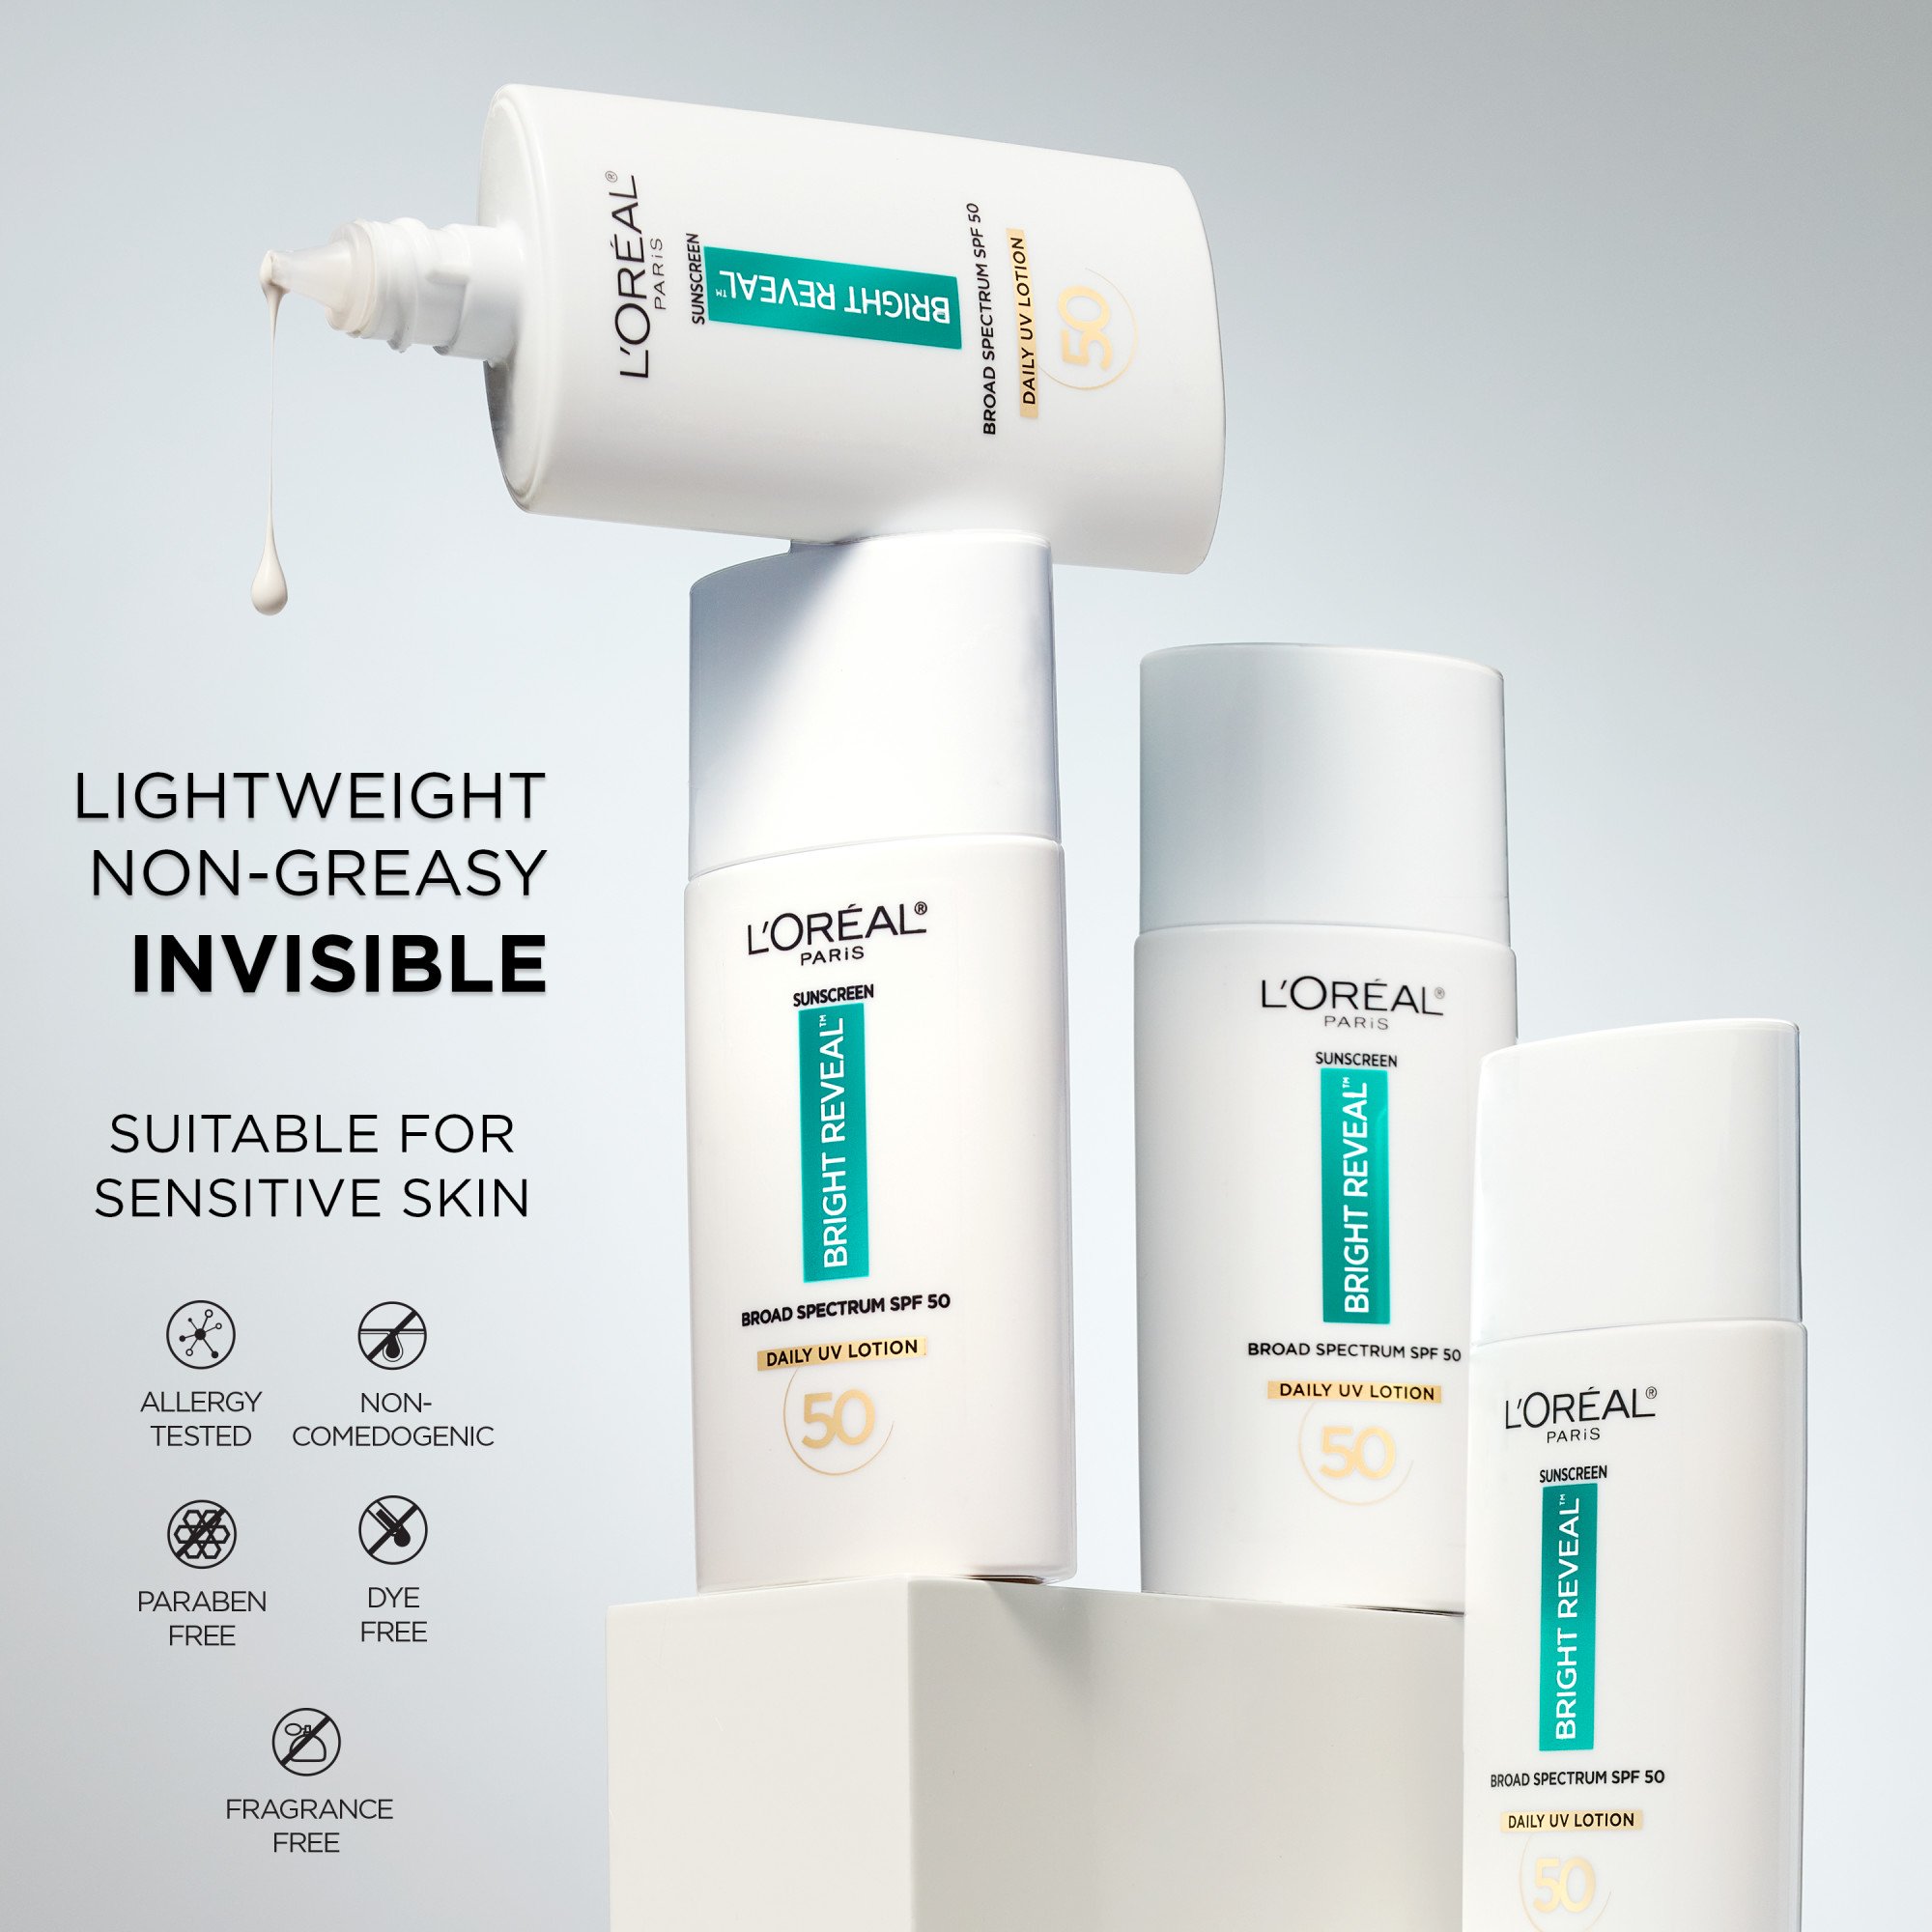  L'Oréal Paris Bright Reveal Broad Spectrum Daily SPF 50 Face  Sunscreen UV Lotion, 1.7 fl oz + Moisturizer Sample : Beauty & Personal Care